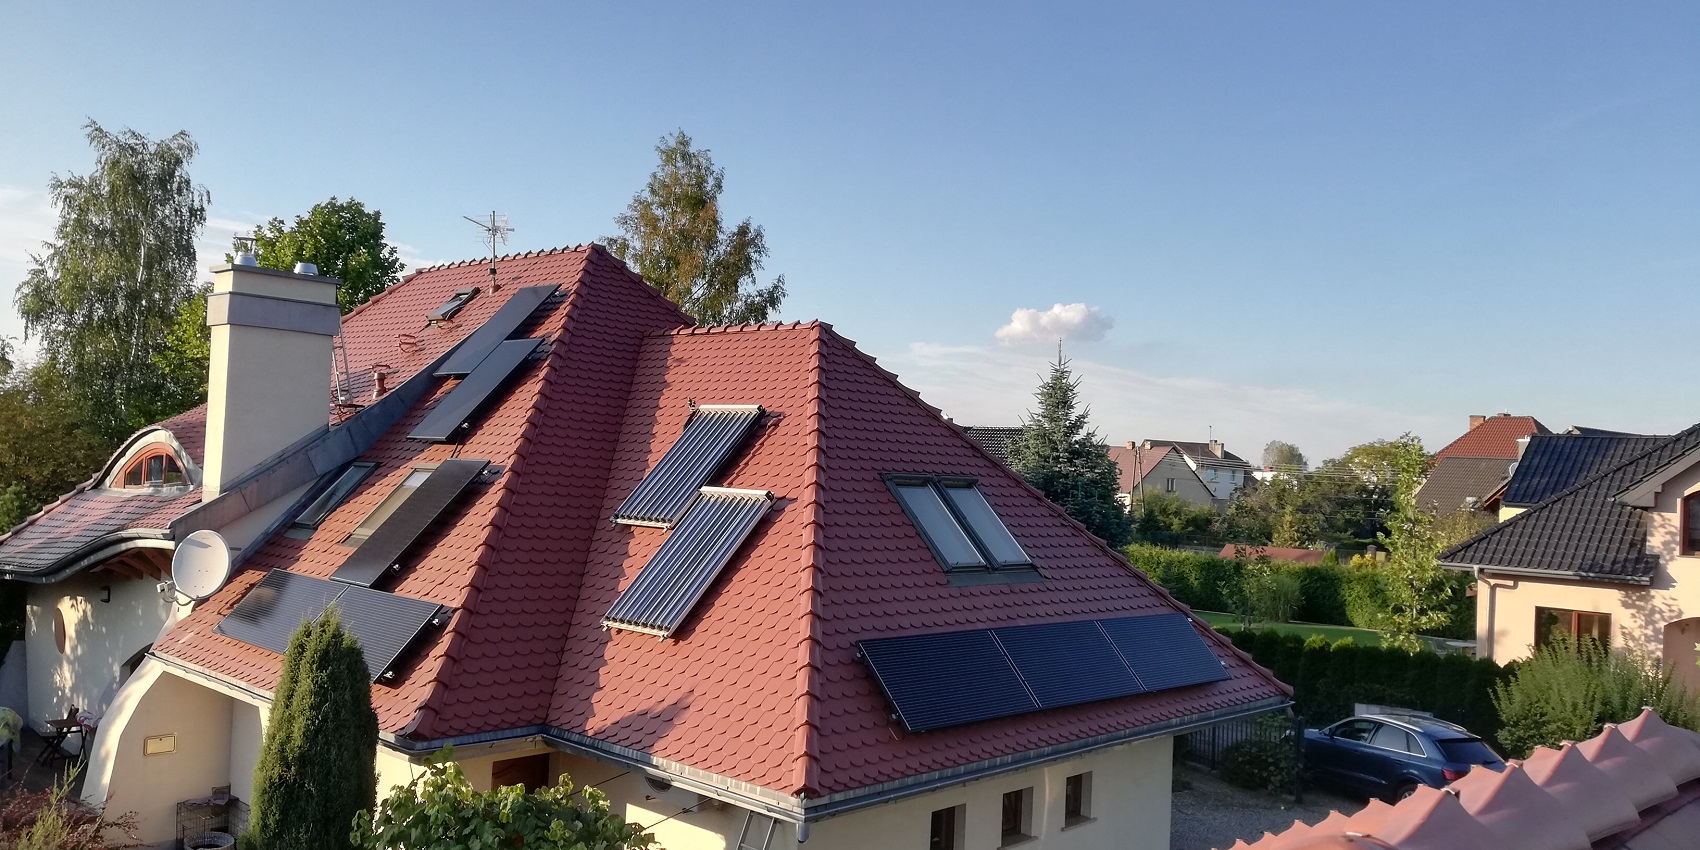 European Photovoltaics Business Development